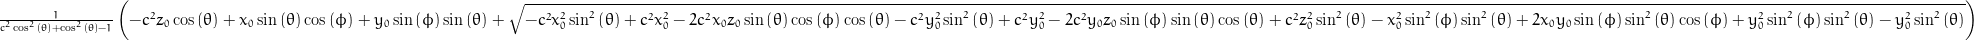 \frac{1}{c^{2} \cos^{2}{\left (\theta \right )} + \cos^{2}{\left (\theta \right )} - 1} \left(- c^{2} z_{0} \cos{\left (\theta \right )} + x_{0} \sin{\left (\theta \right )} \cos{\left (\phi \right )} + y_{0} \sin{\left (\phi \right )} \sin{\left (\theta \right )} + \sqrt{- c^{2} x_{0}^{2} \sin^{2}{\left (\theta \right )} + c^{2} x_{0}^{2} - 2 c^{2} x_{0} z_{0} \sin{\left (\theta \right )} \cos{\left (\phi \right )} \cos{\left (\theta \right )} - c^{2} y_{0}^{2} \sin^{2}{\left (\theta \right )} + c^{2} y_{0}^{2} - 2 c^{2} y_{0} z_{0} \sin{\left (\phi \right )} \sin{\left (\theta \right )} \cos{\left (\theta \right )} + c^{2} z_{0}^{2} \sin^{2}{\left (\theta \right )} - x_{0}^{2} \sin^{2}{\left (\phi \right )} \sin^{2}{\left (\theta \right )} + 2 x_{0} y_{0} \sin{\left (\phi \right )} \sin^{2}{\left (\theta \right )} \cos{\left (\phi \right )} + y_{0}^{2} \sin^{2}{\left (\phi \right )} \sin^{2}{\left (\theta \right )} - y_{0}^{2} \sin^{2}{\left (\theta \right )}}\right)